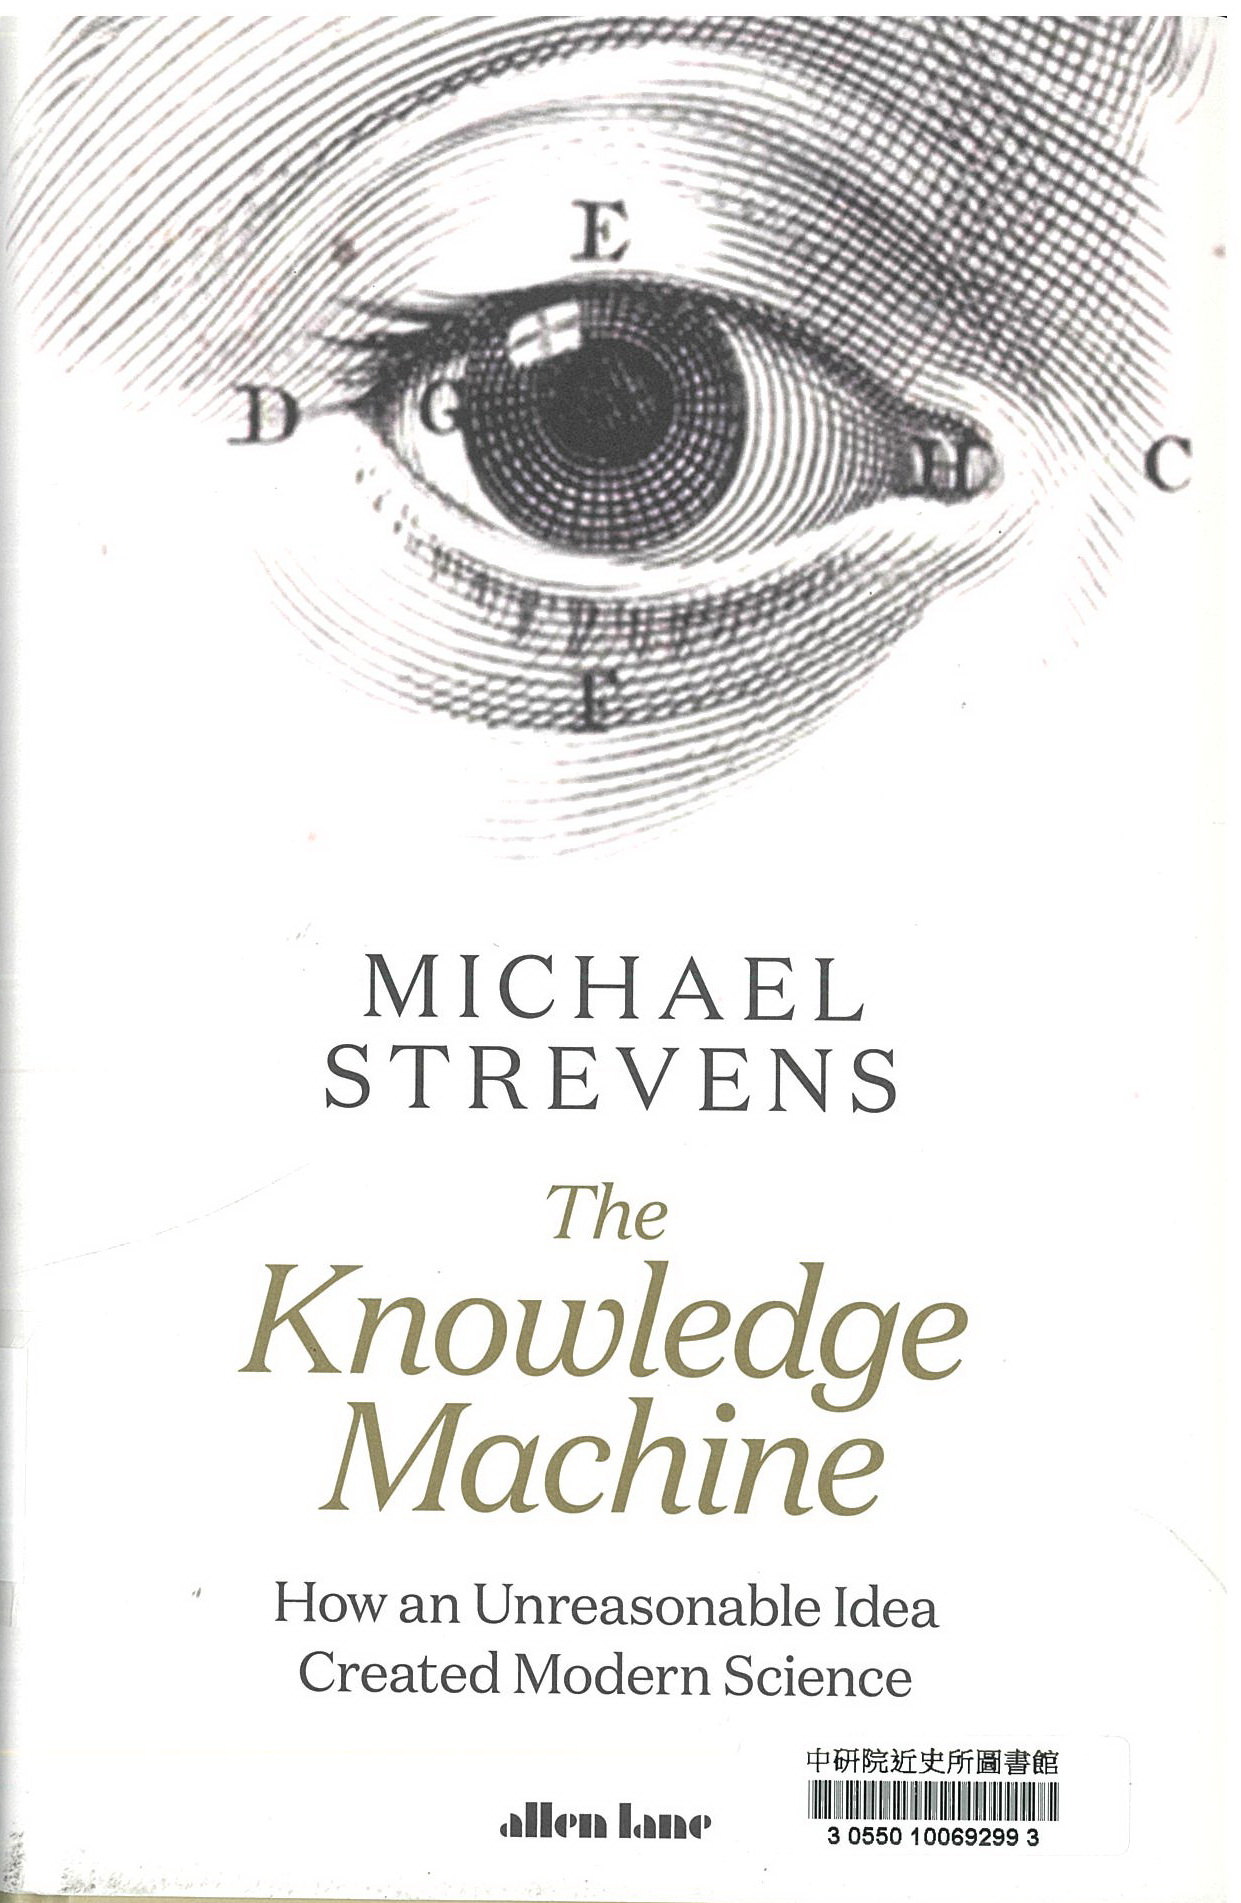 The knowledge machine :how an unreasonable idea created modern science